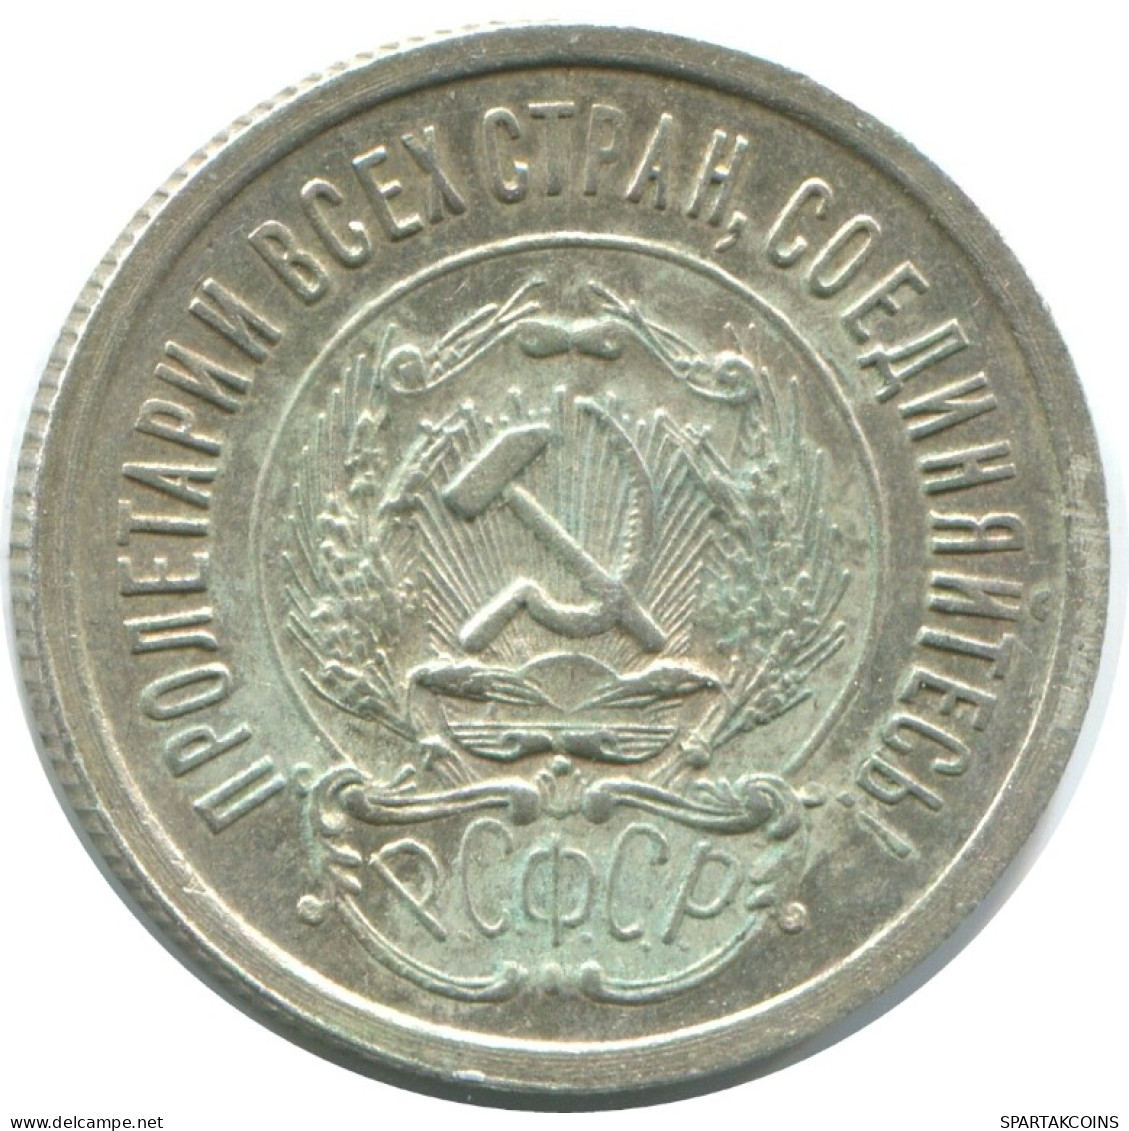 20 KOPEKS 1923 RUSSLAND RUSSIA RSFSR SILBER Münze HIGH GRADE #AF514.4.D.A - Russie